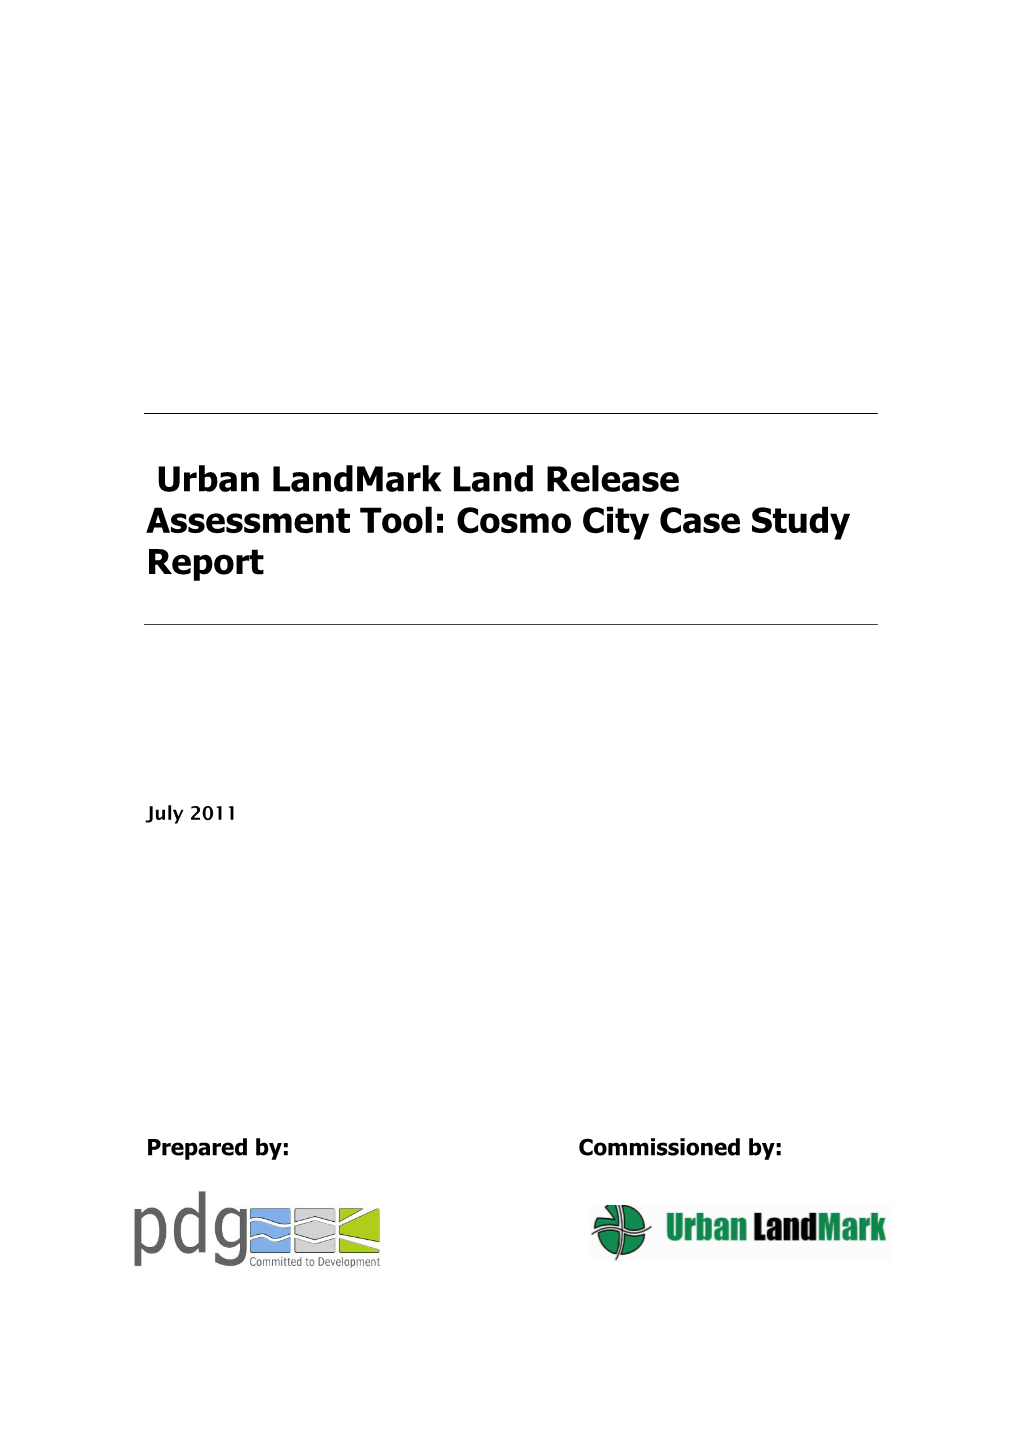 Urban Landmark Land Release Assessment Tool: Cosmo City Case Study Report